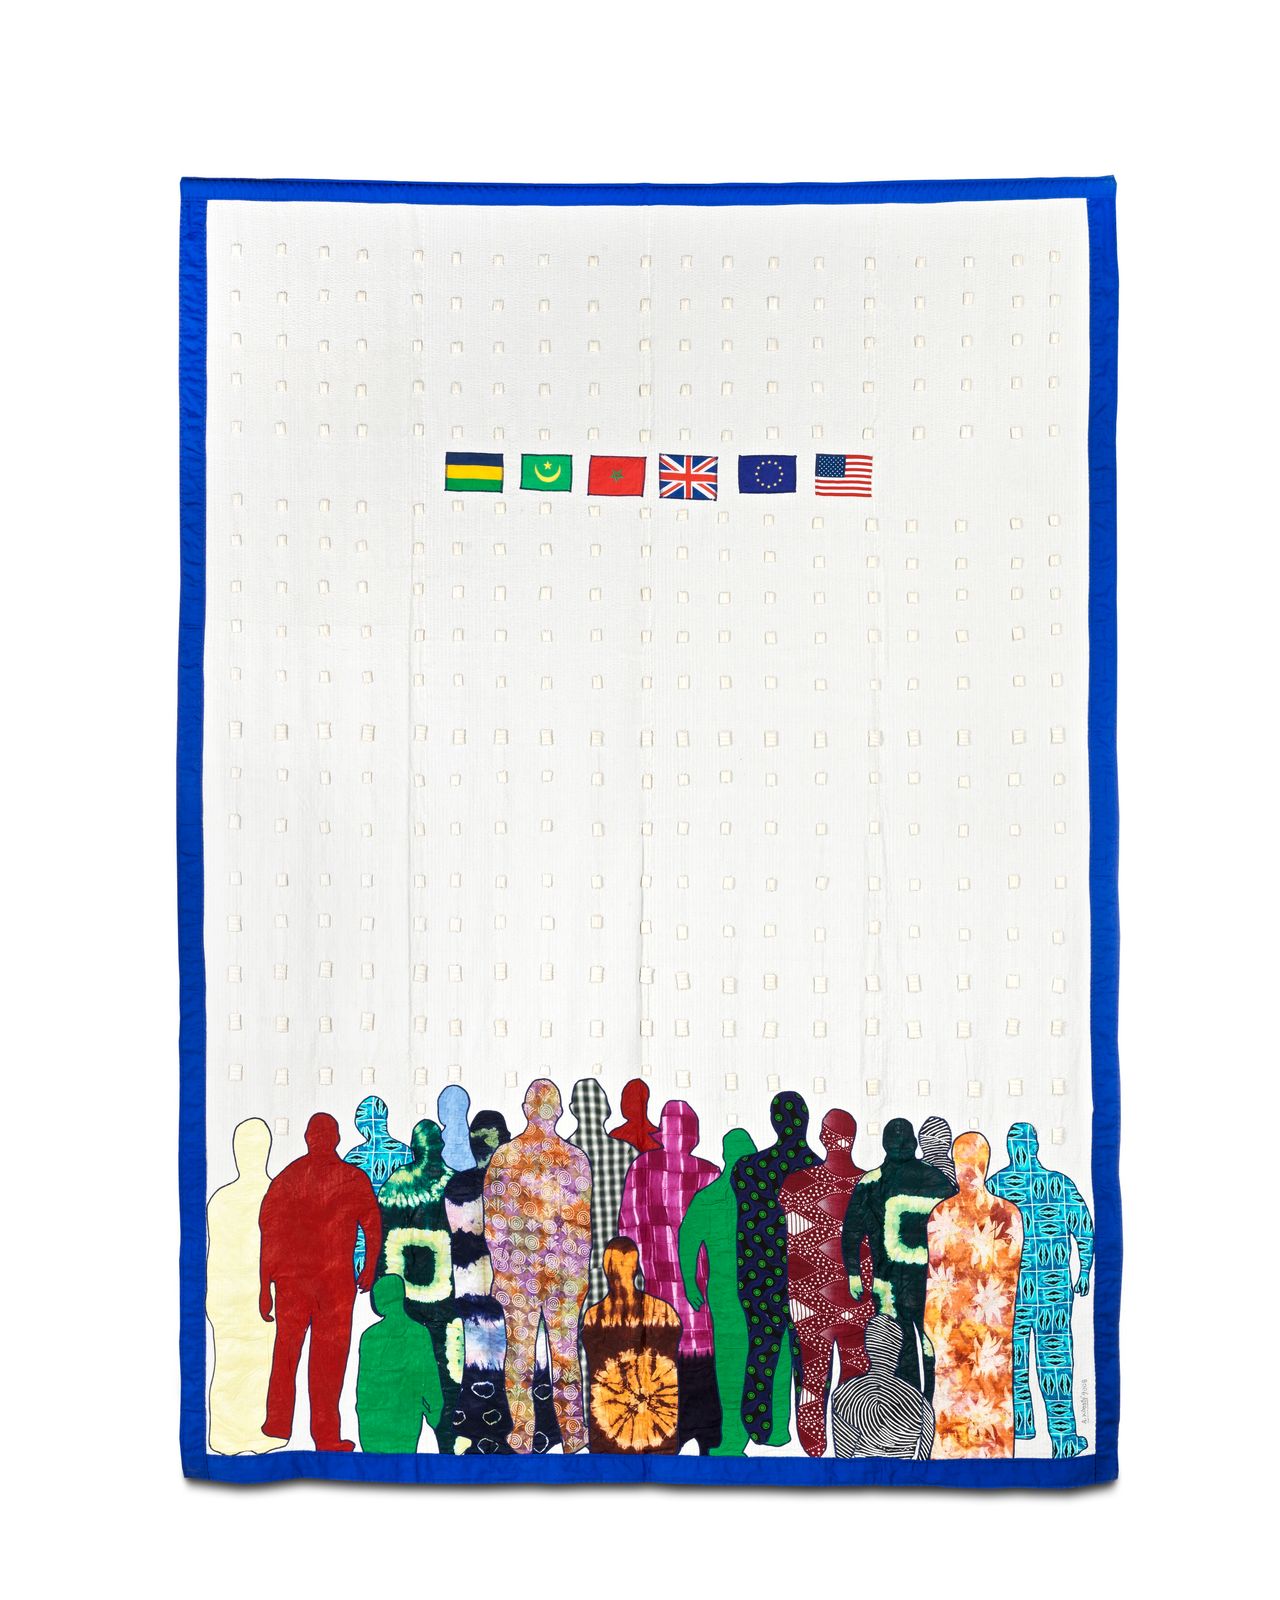 "Generation Biometrique" no. 5 (2008- 2013), Abdoulaye Konaté